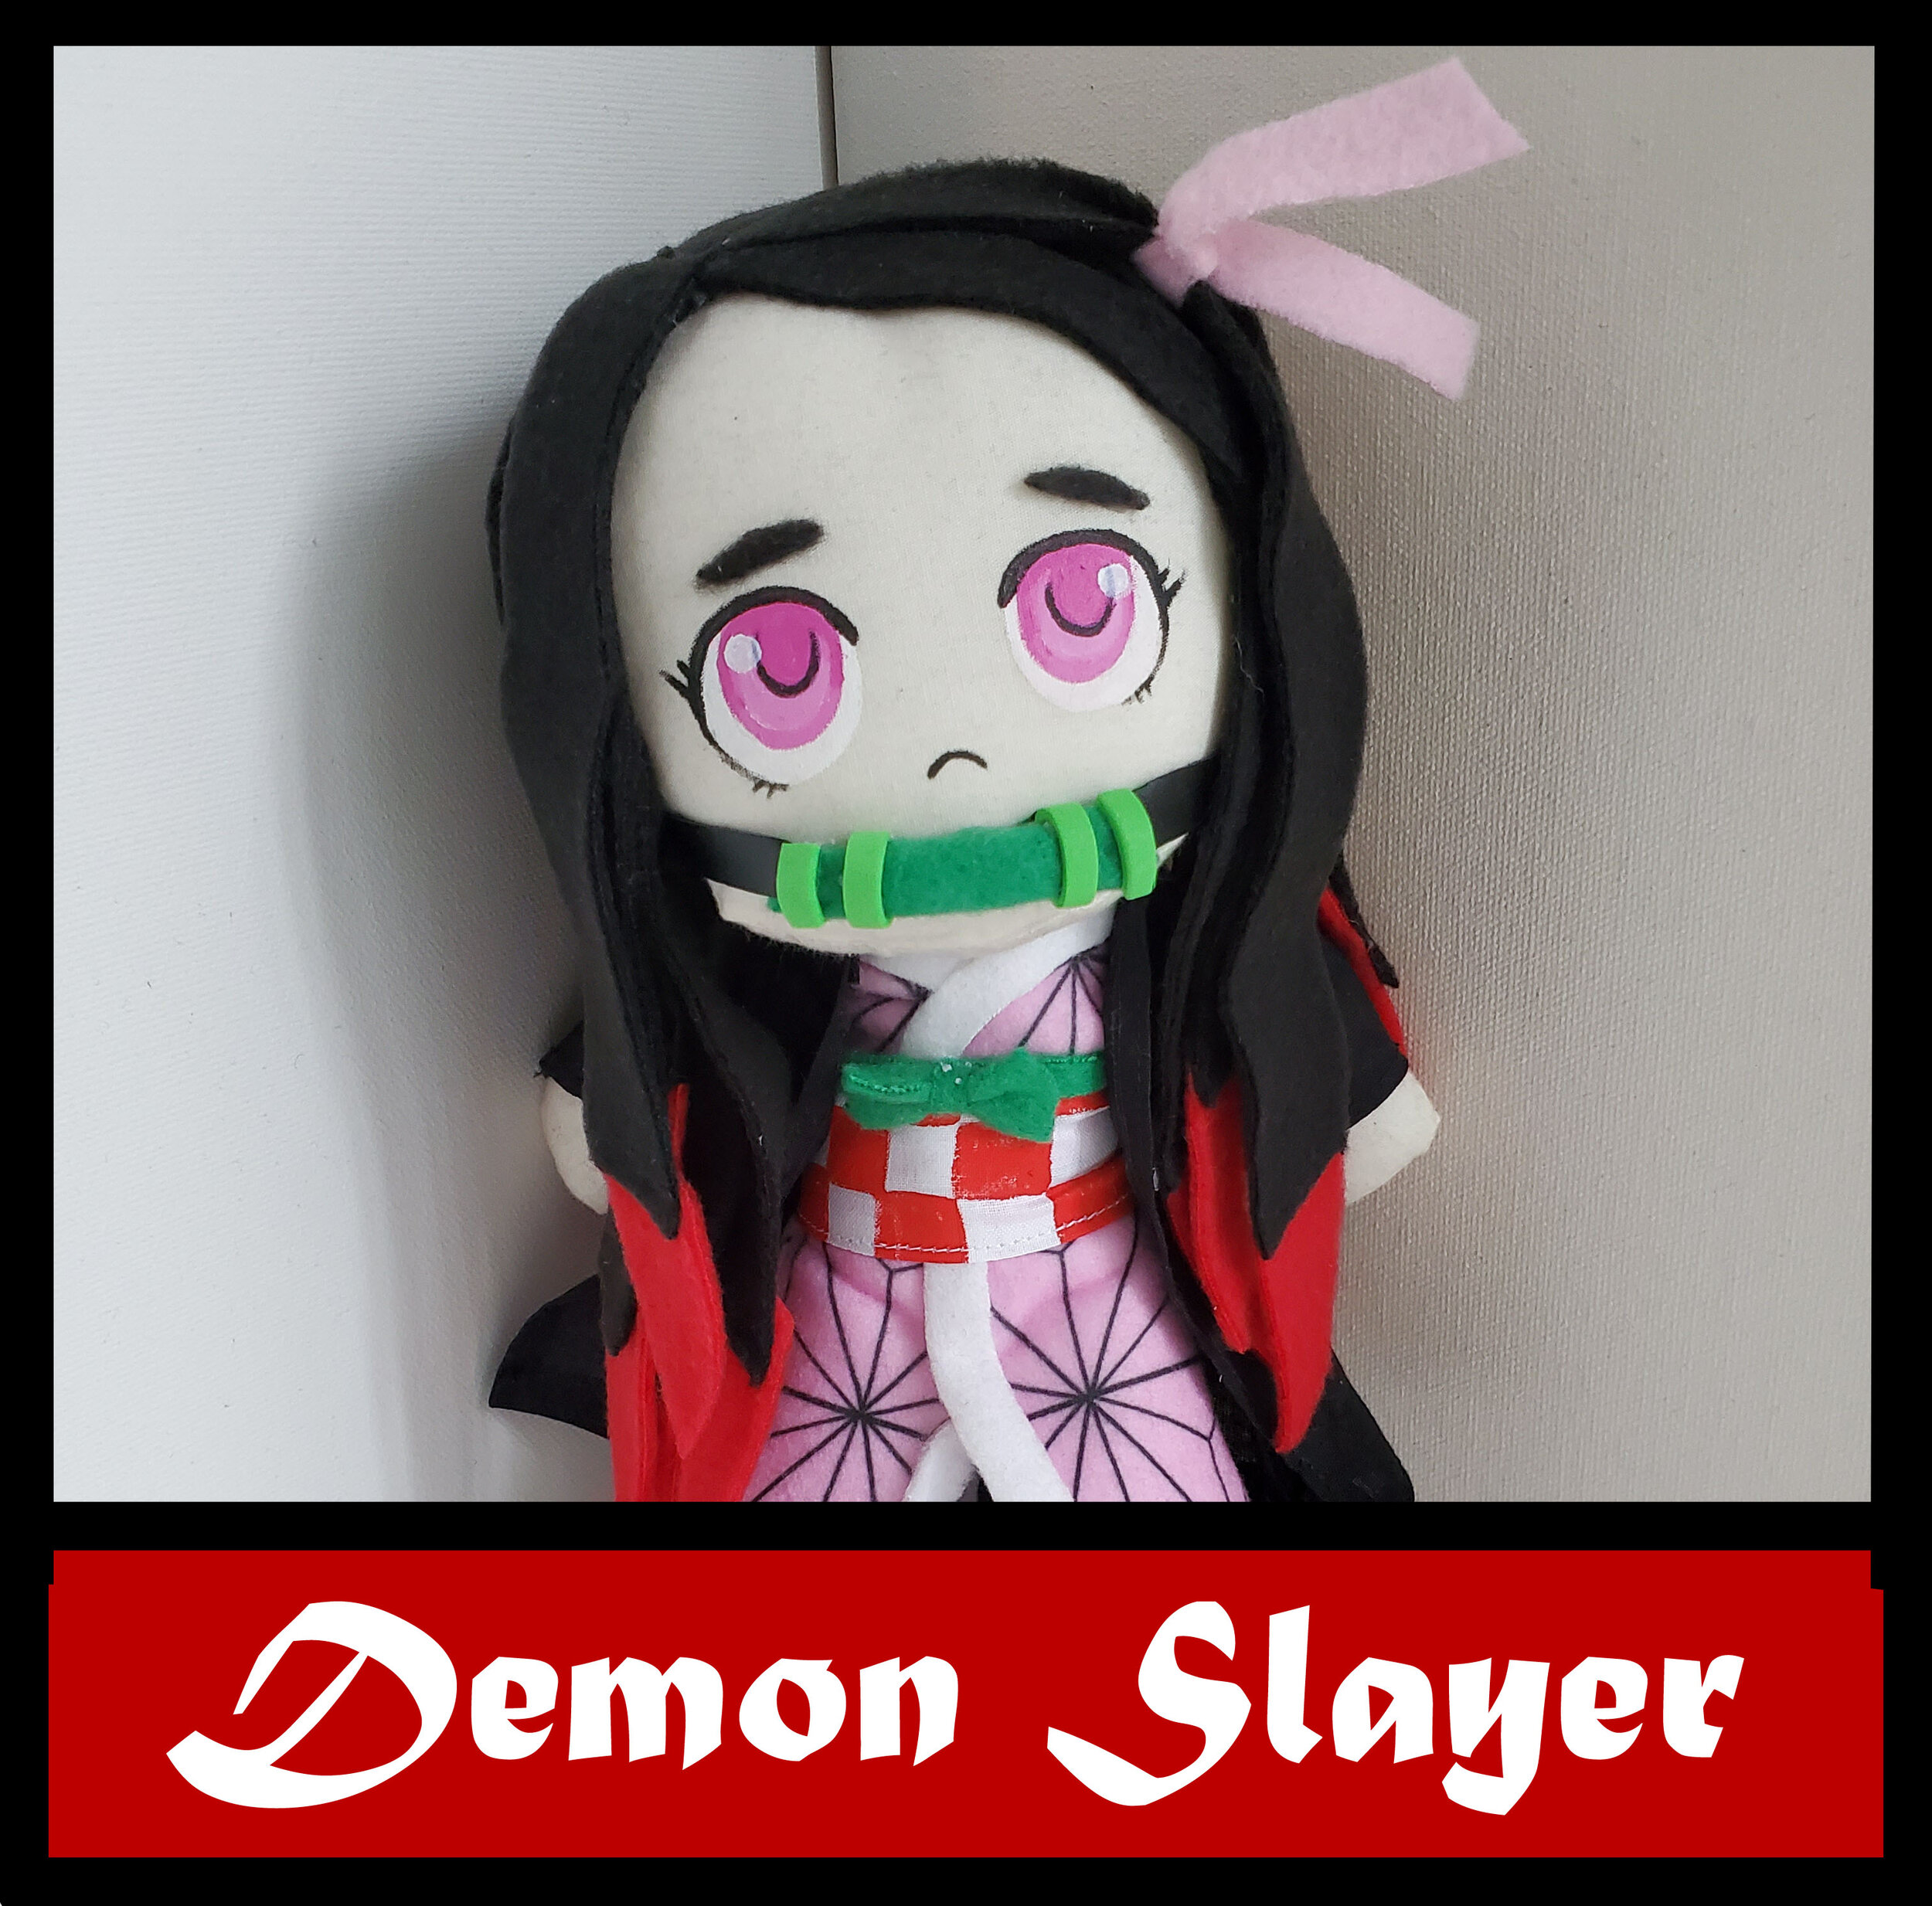 DemonSlayerHubPic.jpg